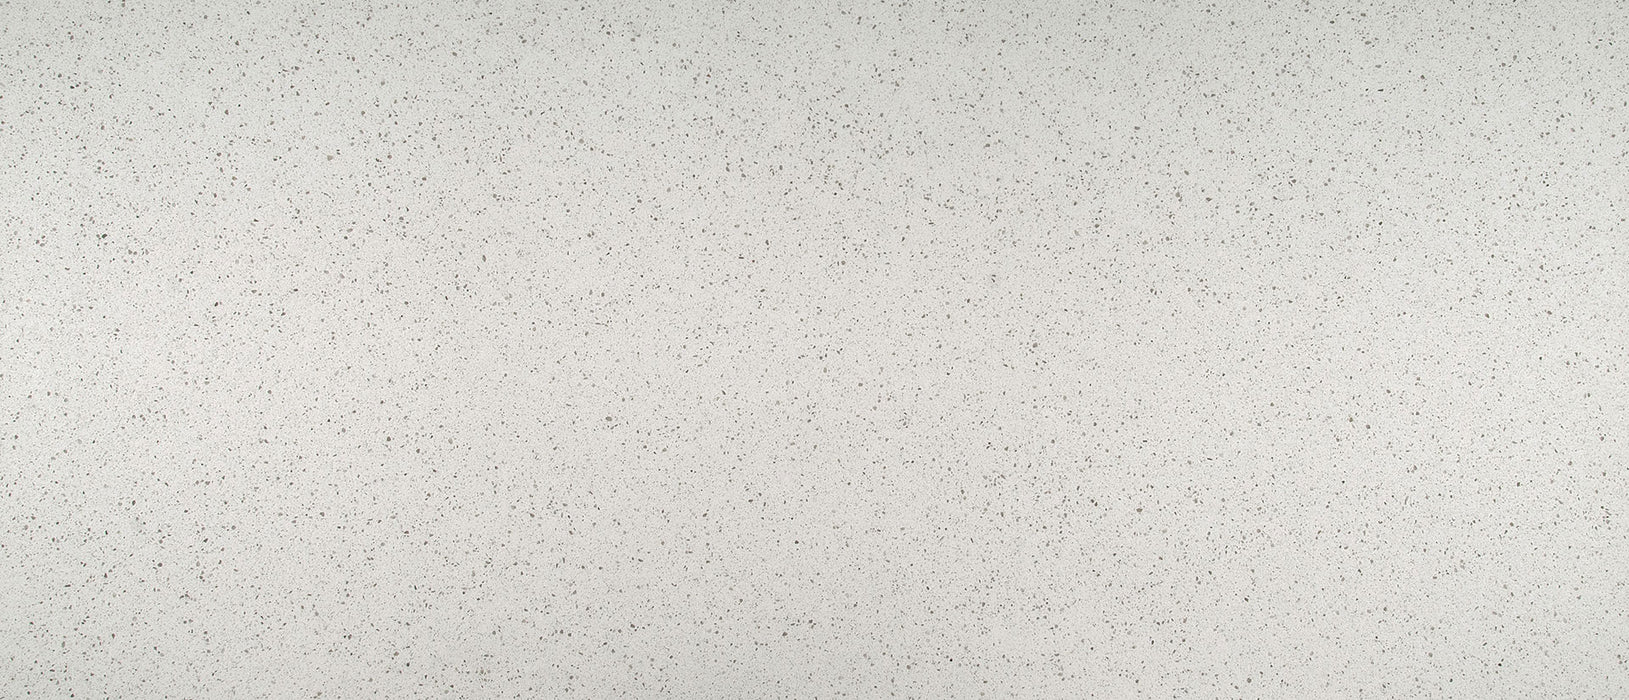 Iced white quartz countertop slab